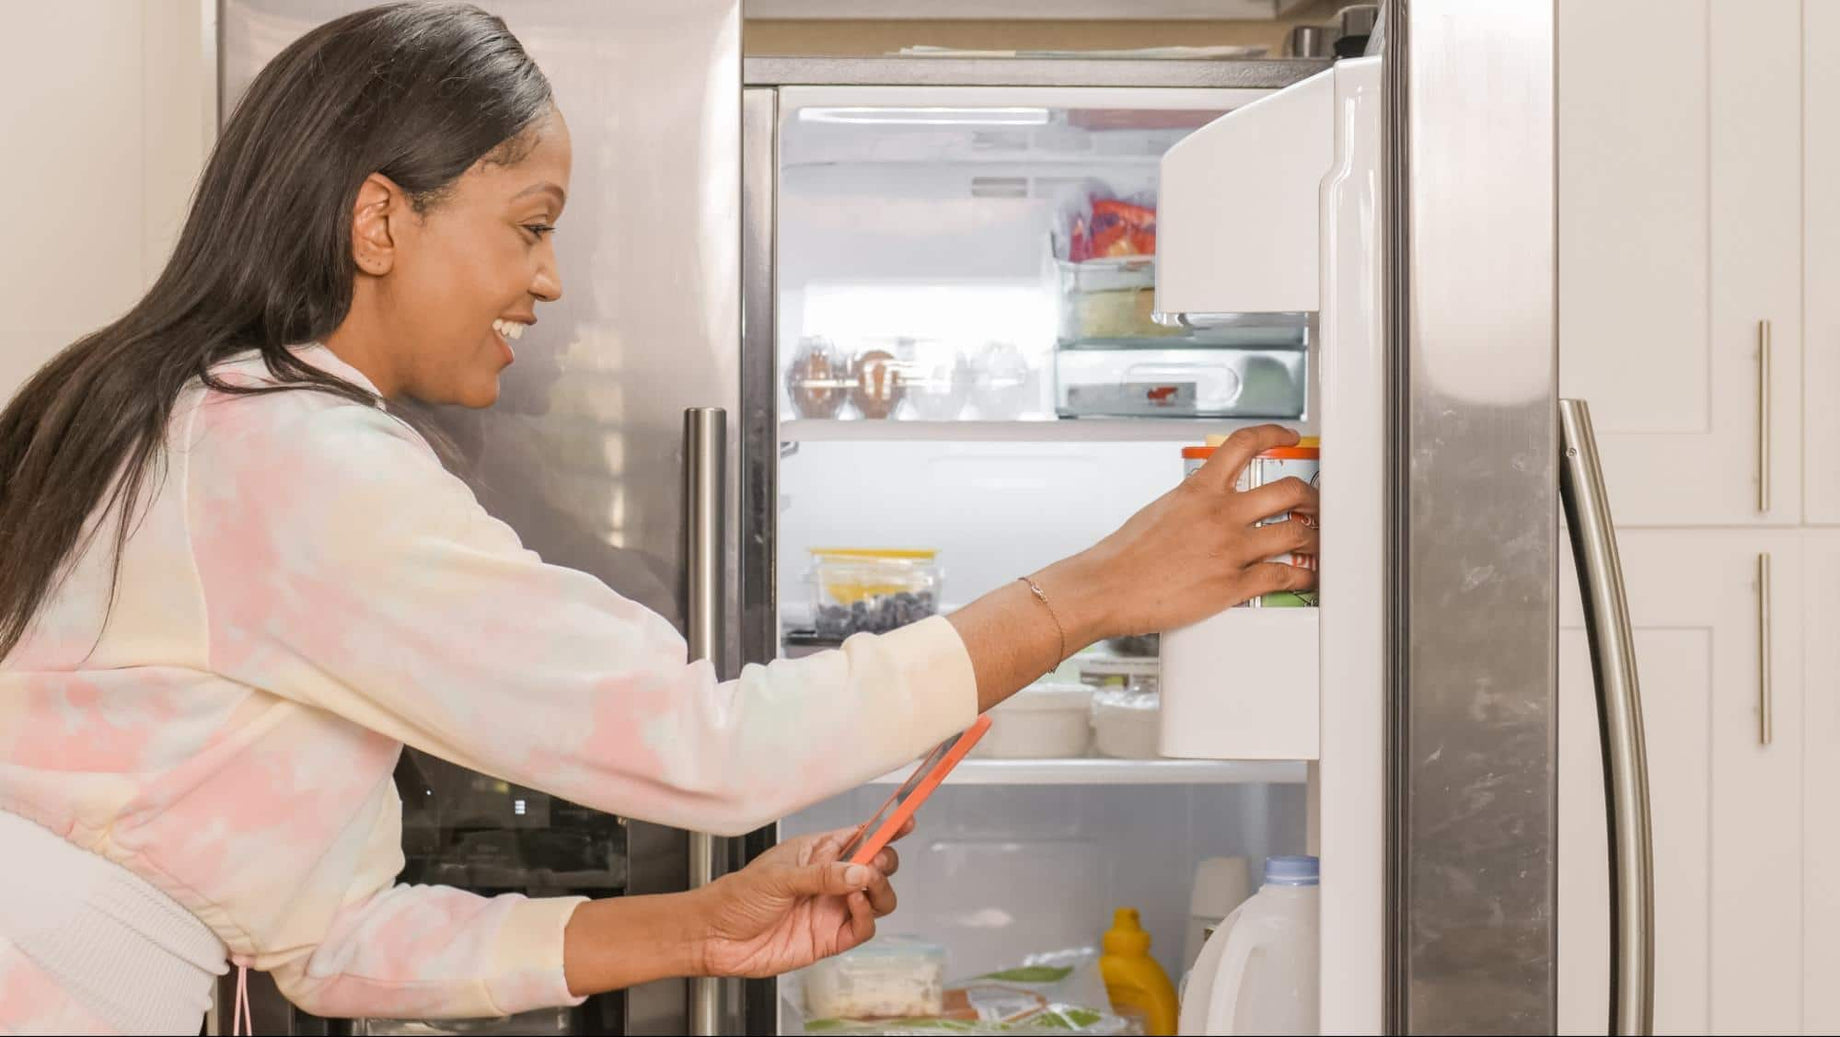 Black Woman getting in refrigerator, reaching for yogurt